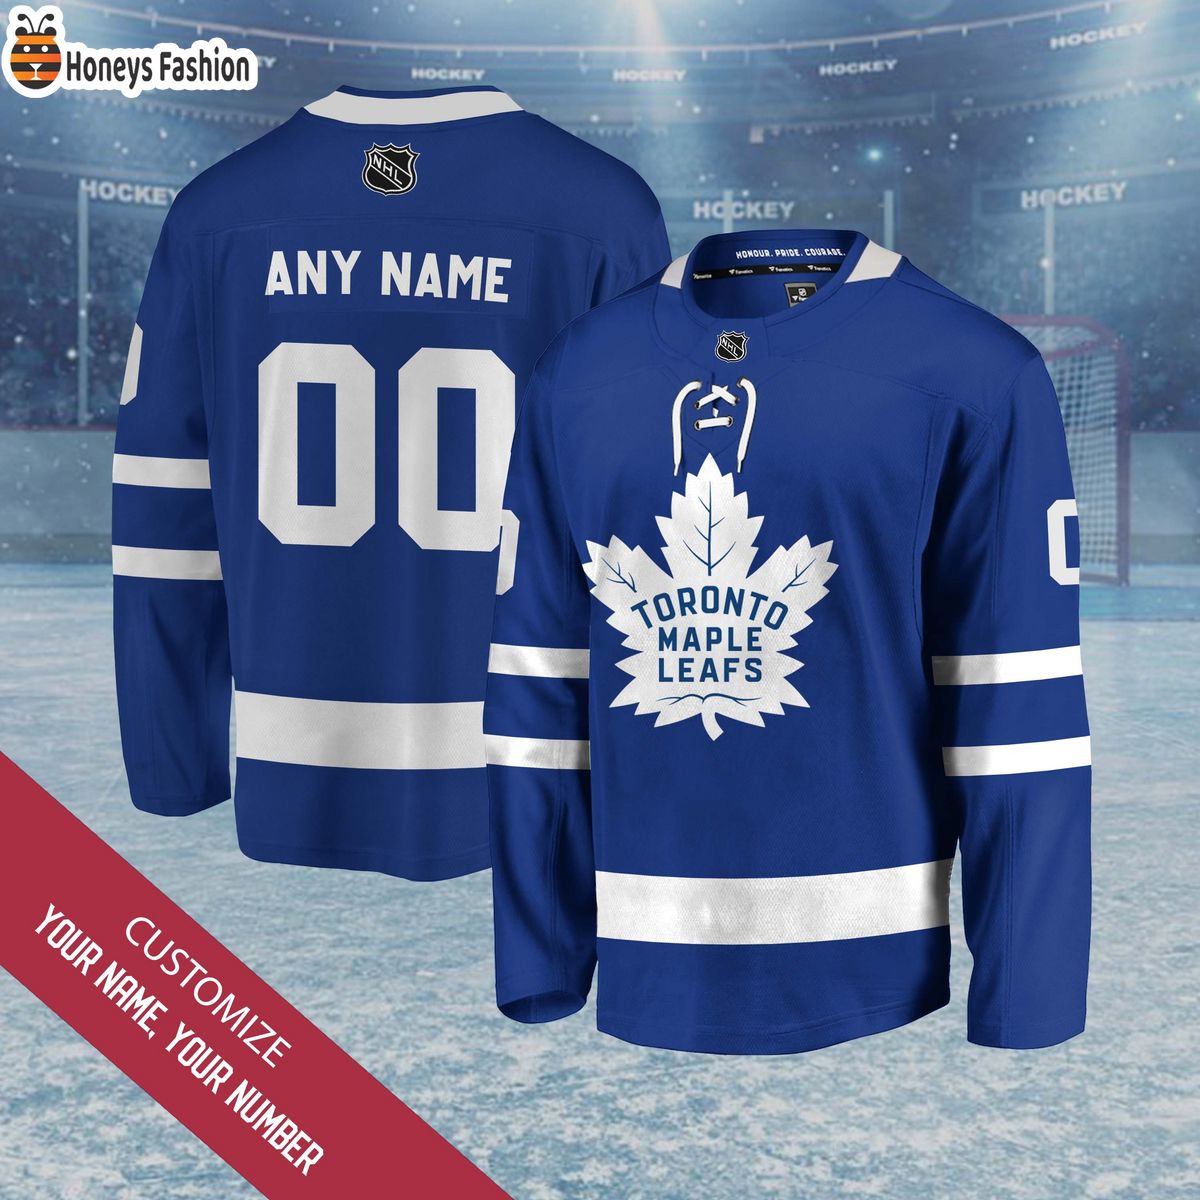 Toronto Maple Leafs Personalized Hockey Jersey